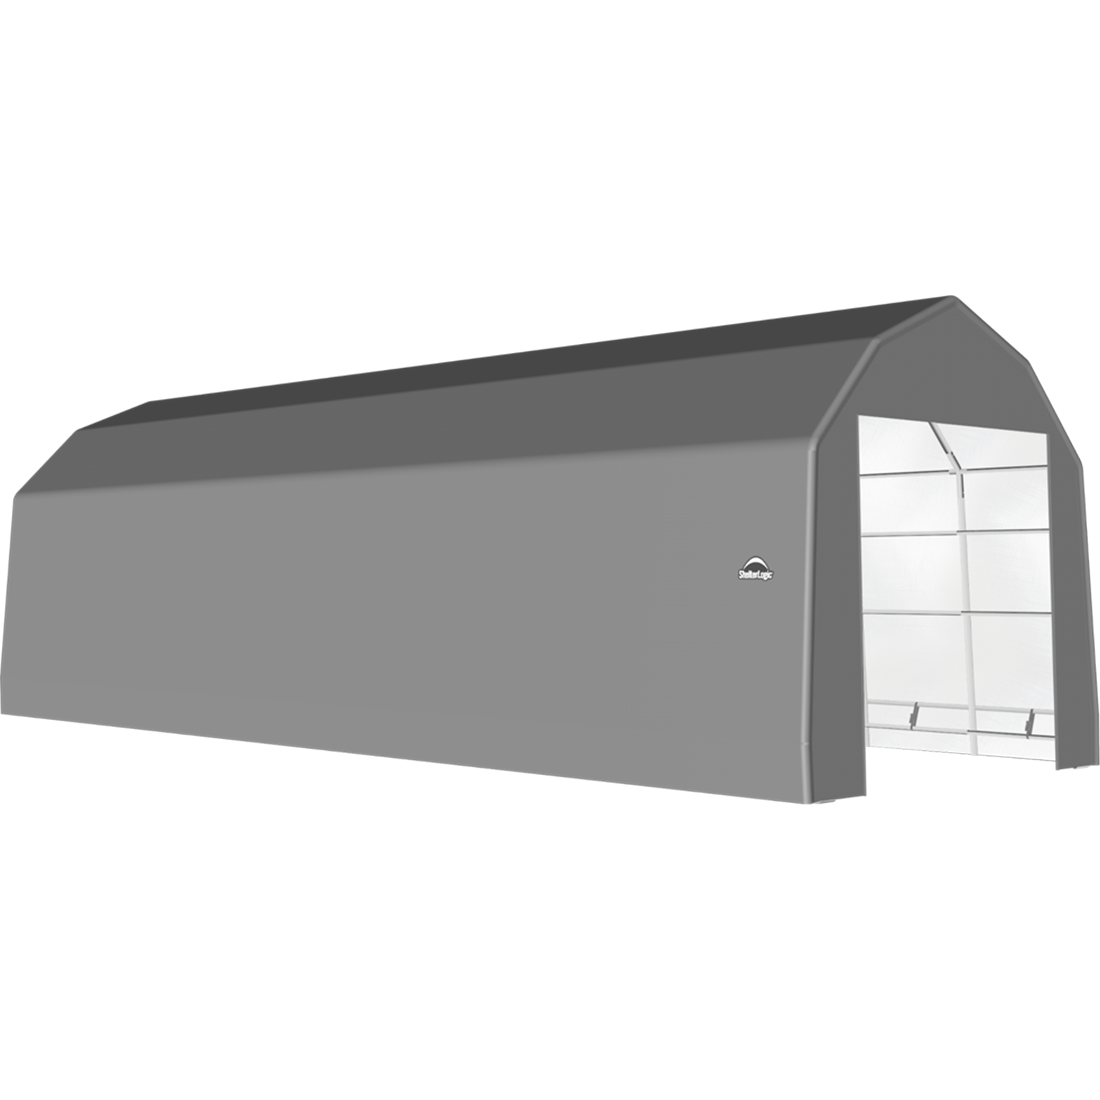 ShelterTech SP Series Barn Shelter, 15 ft. x 36 ft. x 14 ft. Heavy Duty PVC 14.5 oz. Gray